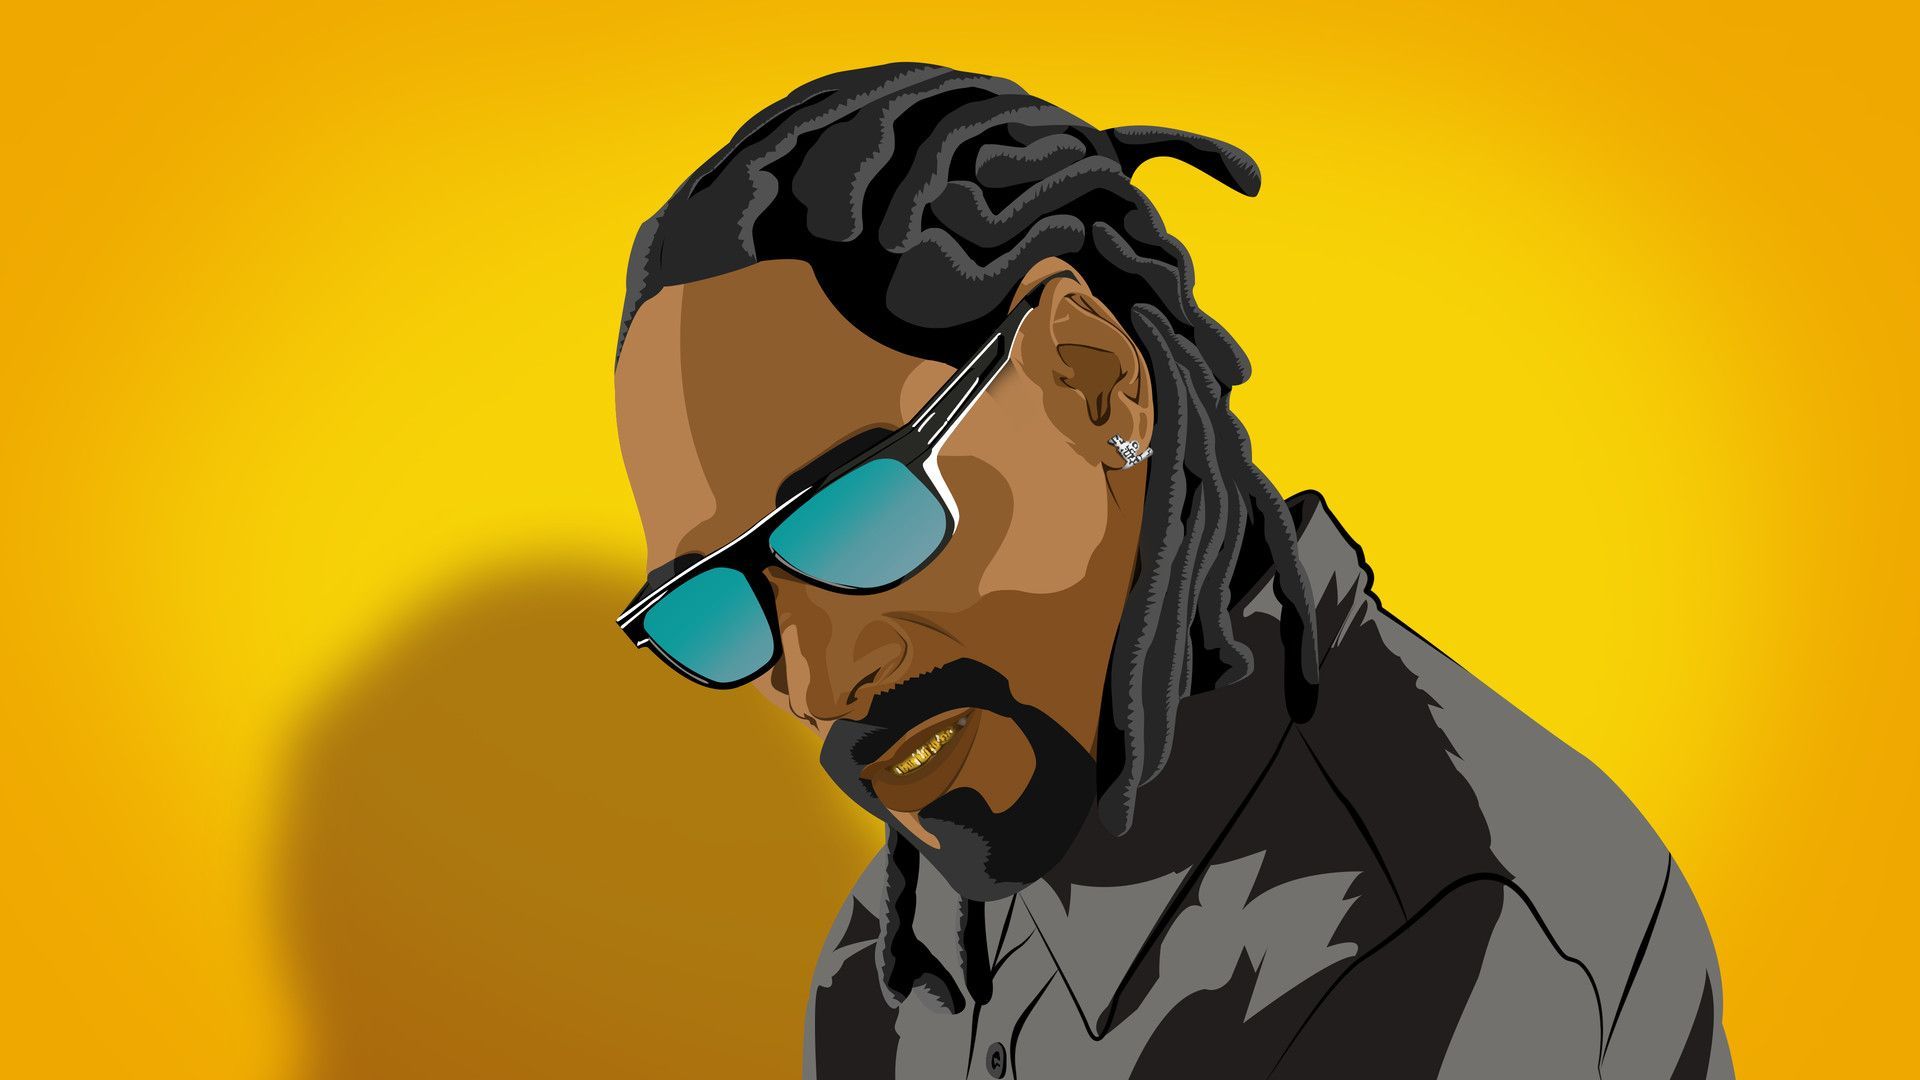 Snoop Dogg Cartoon Wallpapers - Wallpaper Cave